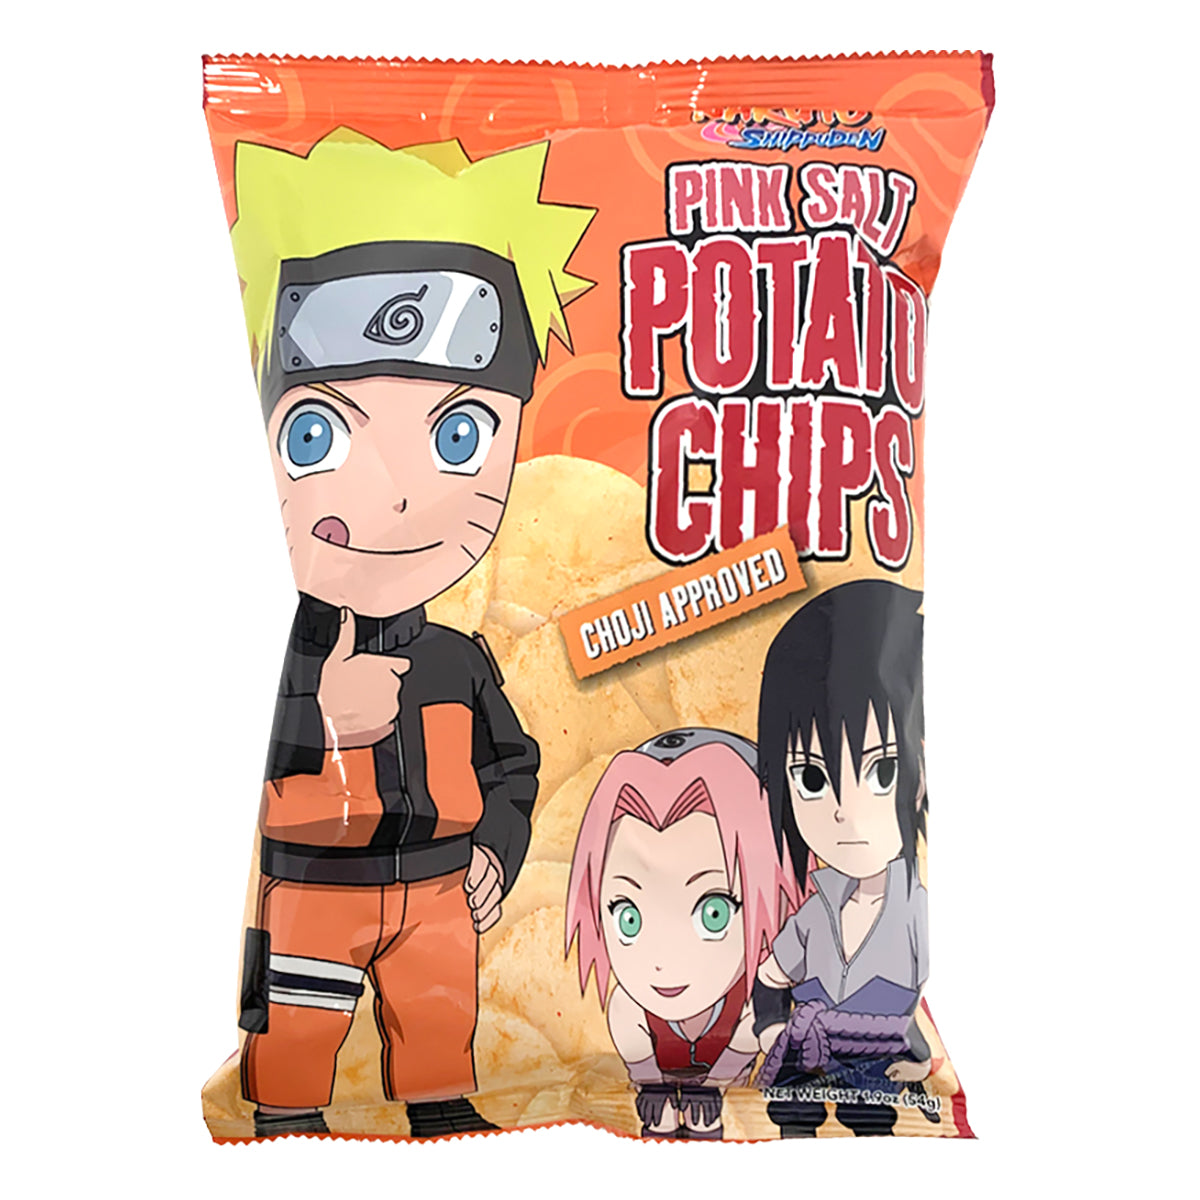 naruto shippuden pink salt potato chips - 54g